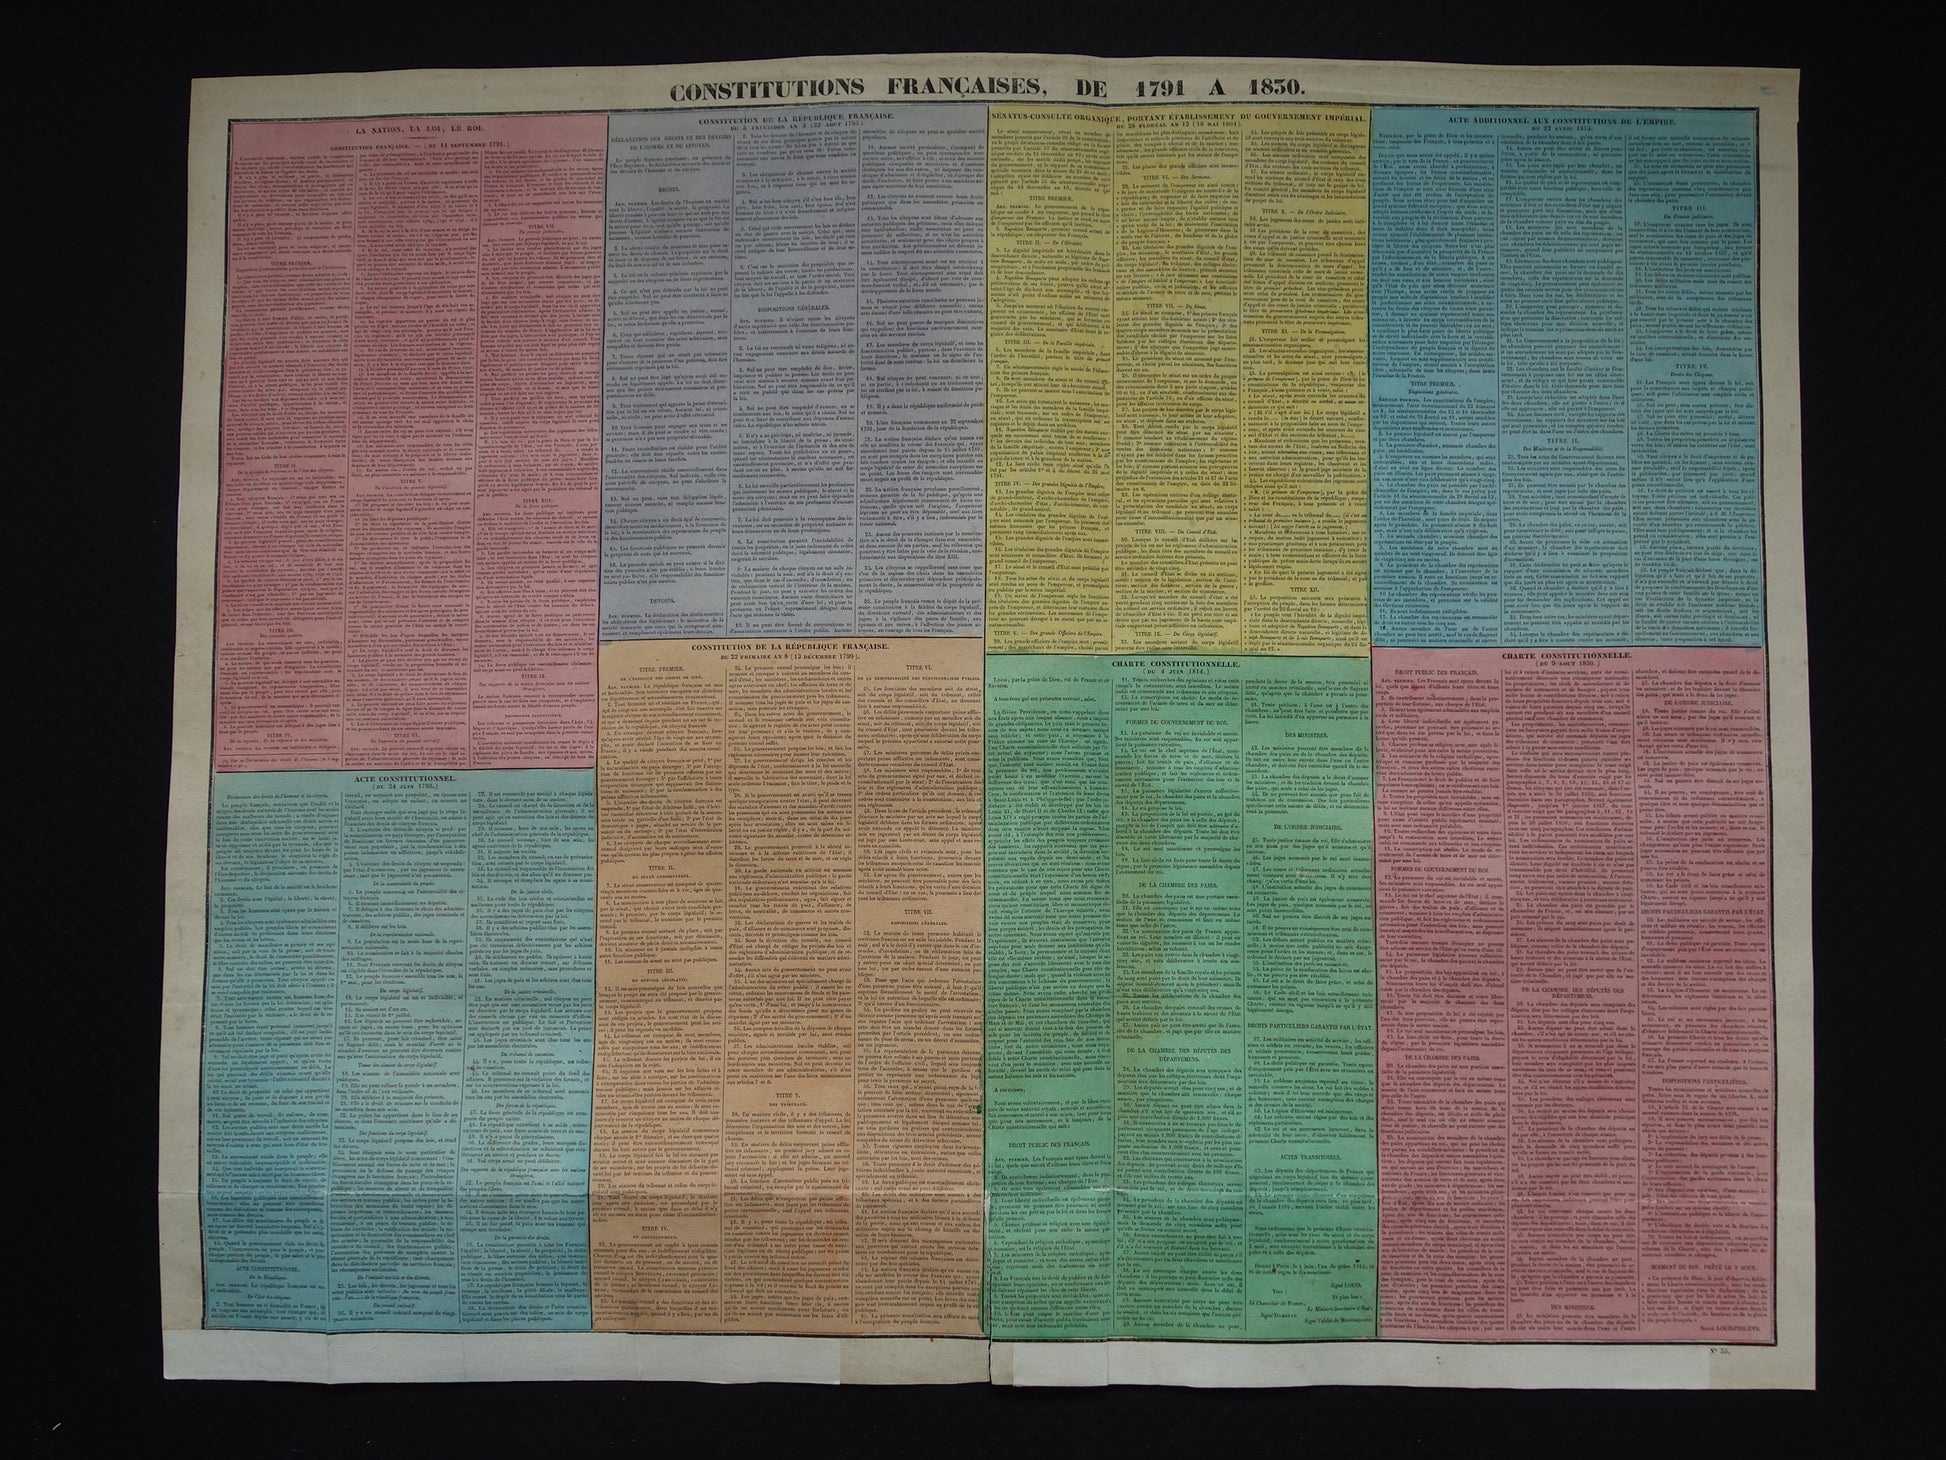 Constitutions Francaises, de 1791 a 1830. Binet Goetschy